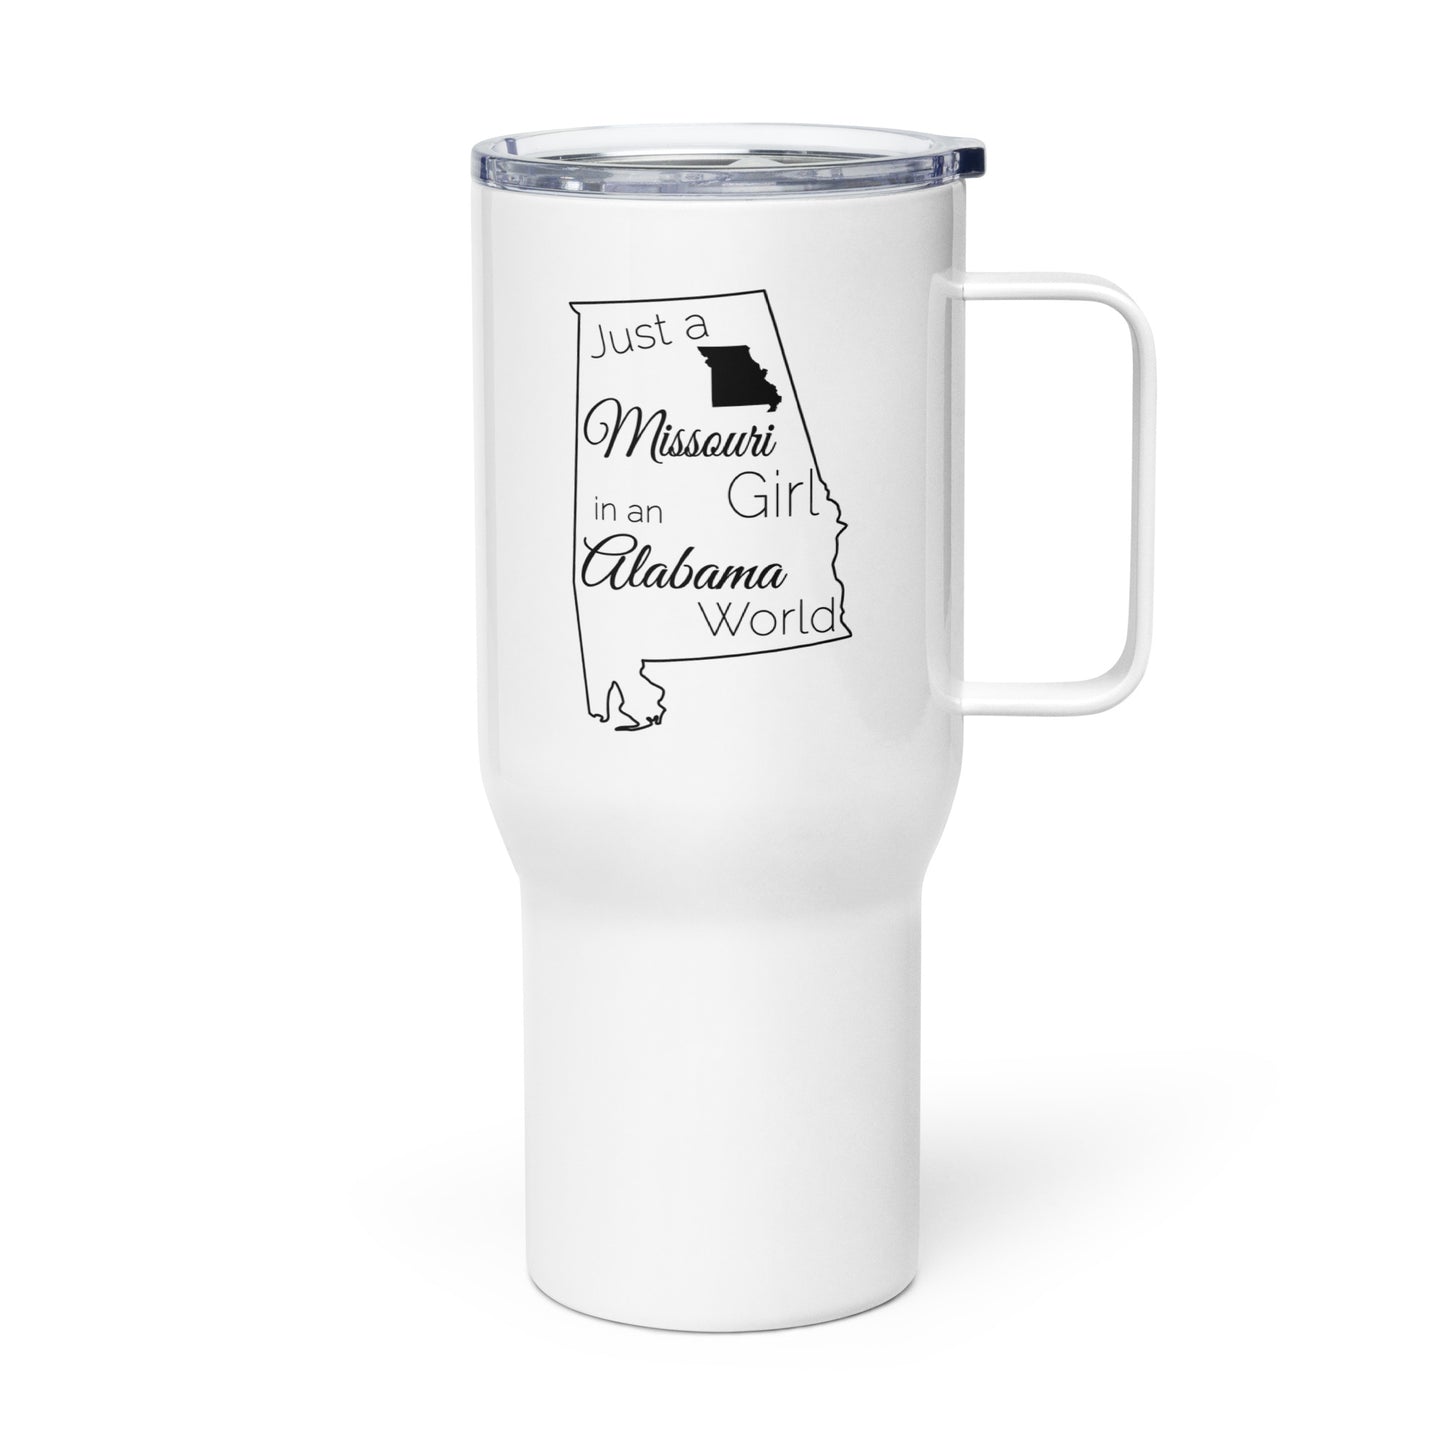 Just a Missouri Girl in an Alabama World Travel mug with a handle